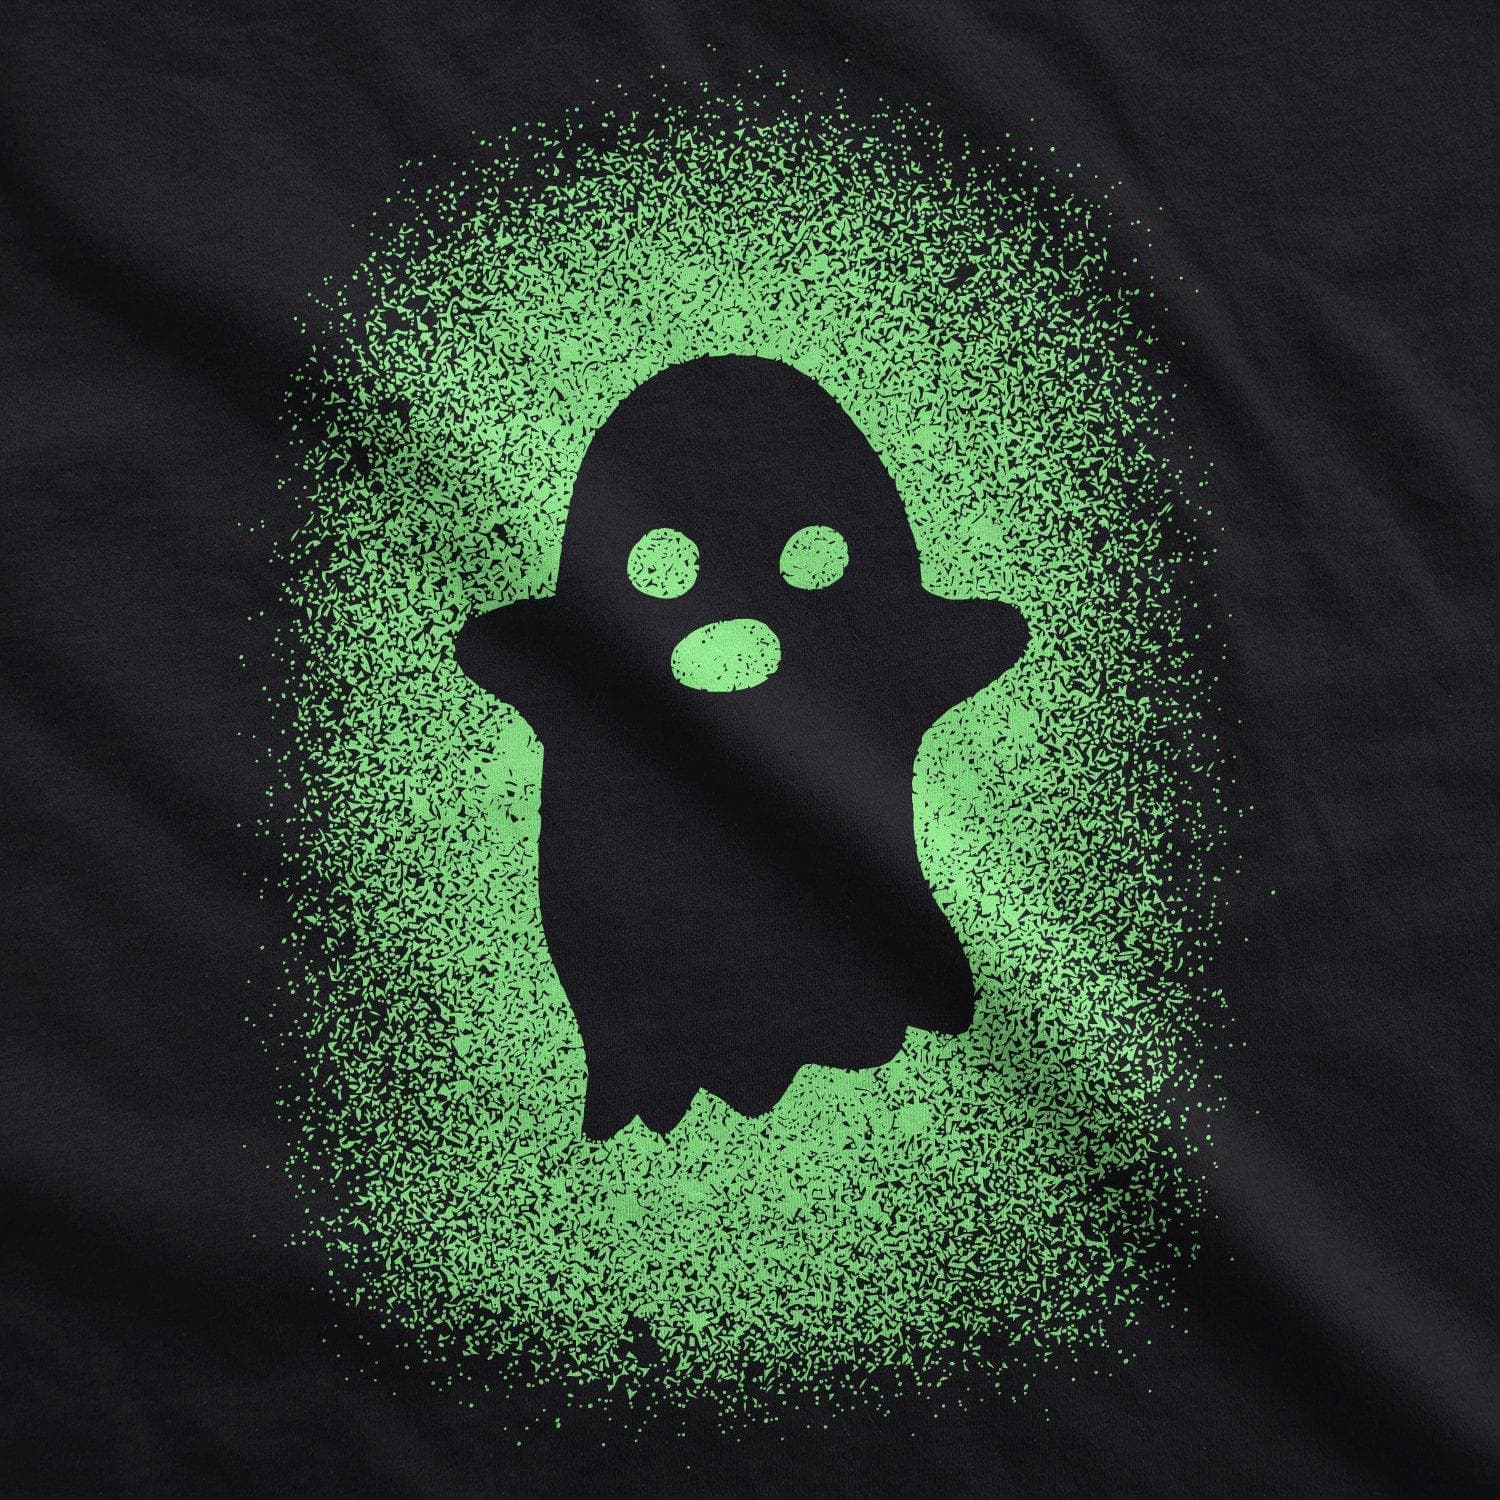 Glowing Ghost Women's Tshirt - Crazy Dog T-Shirts